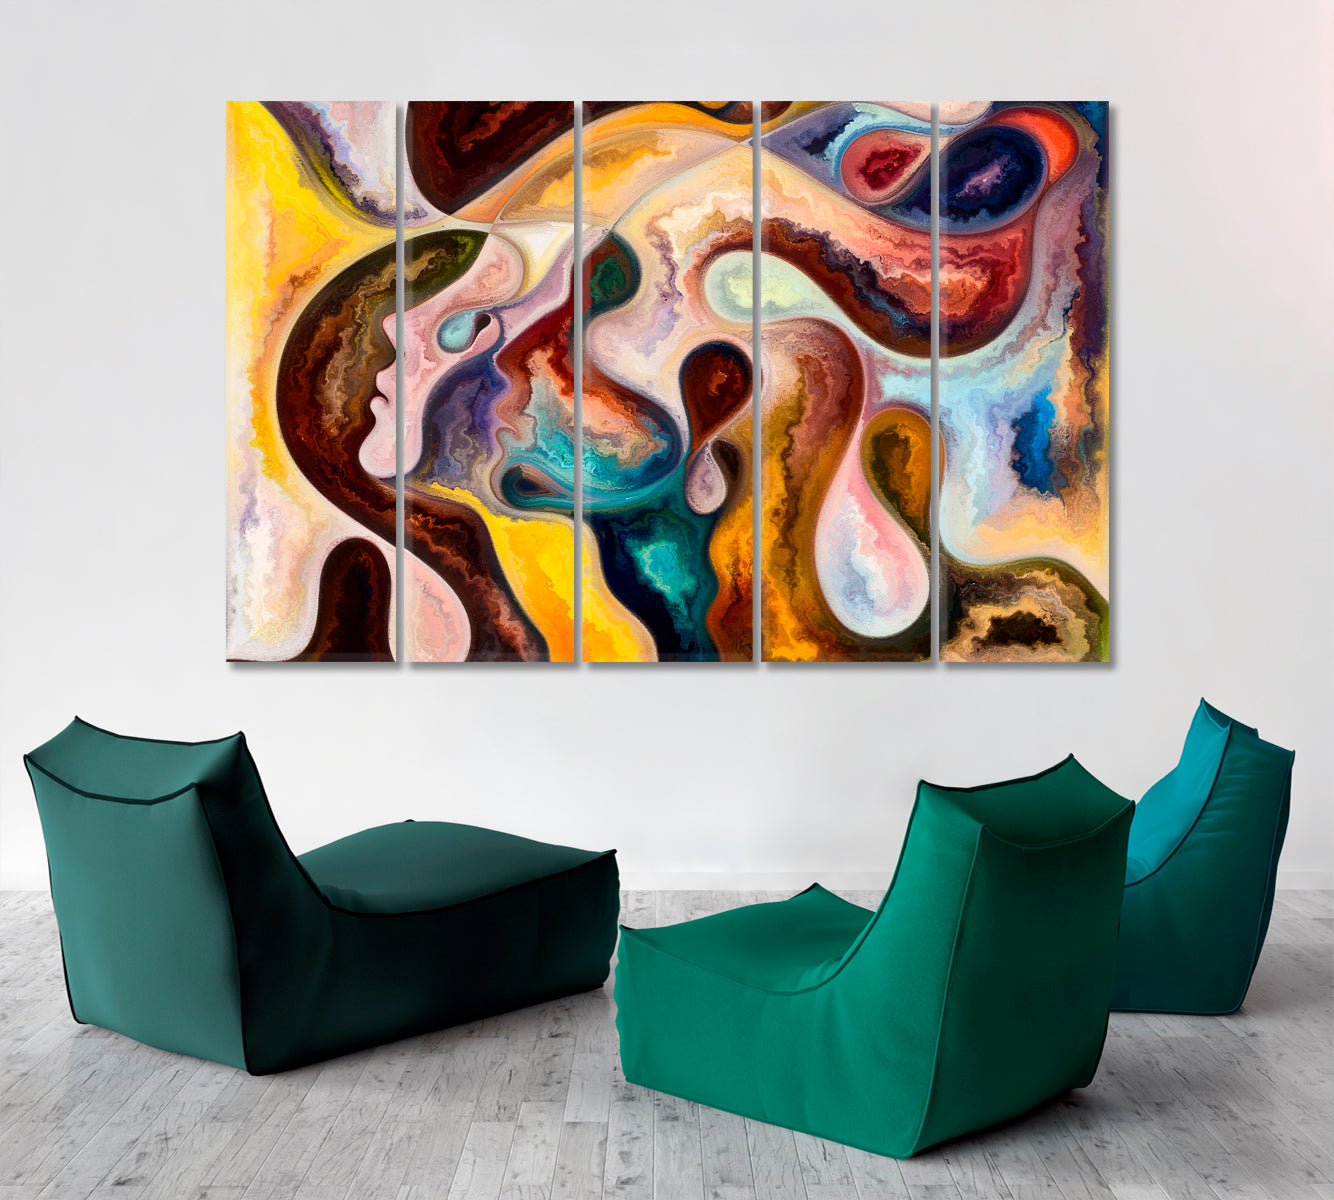 Abstract Shapes Vivid Dreams Painting Consciousness Art Artesty 5 panels 36" x 24" 